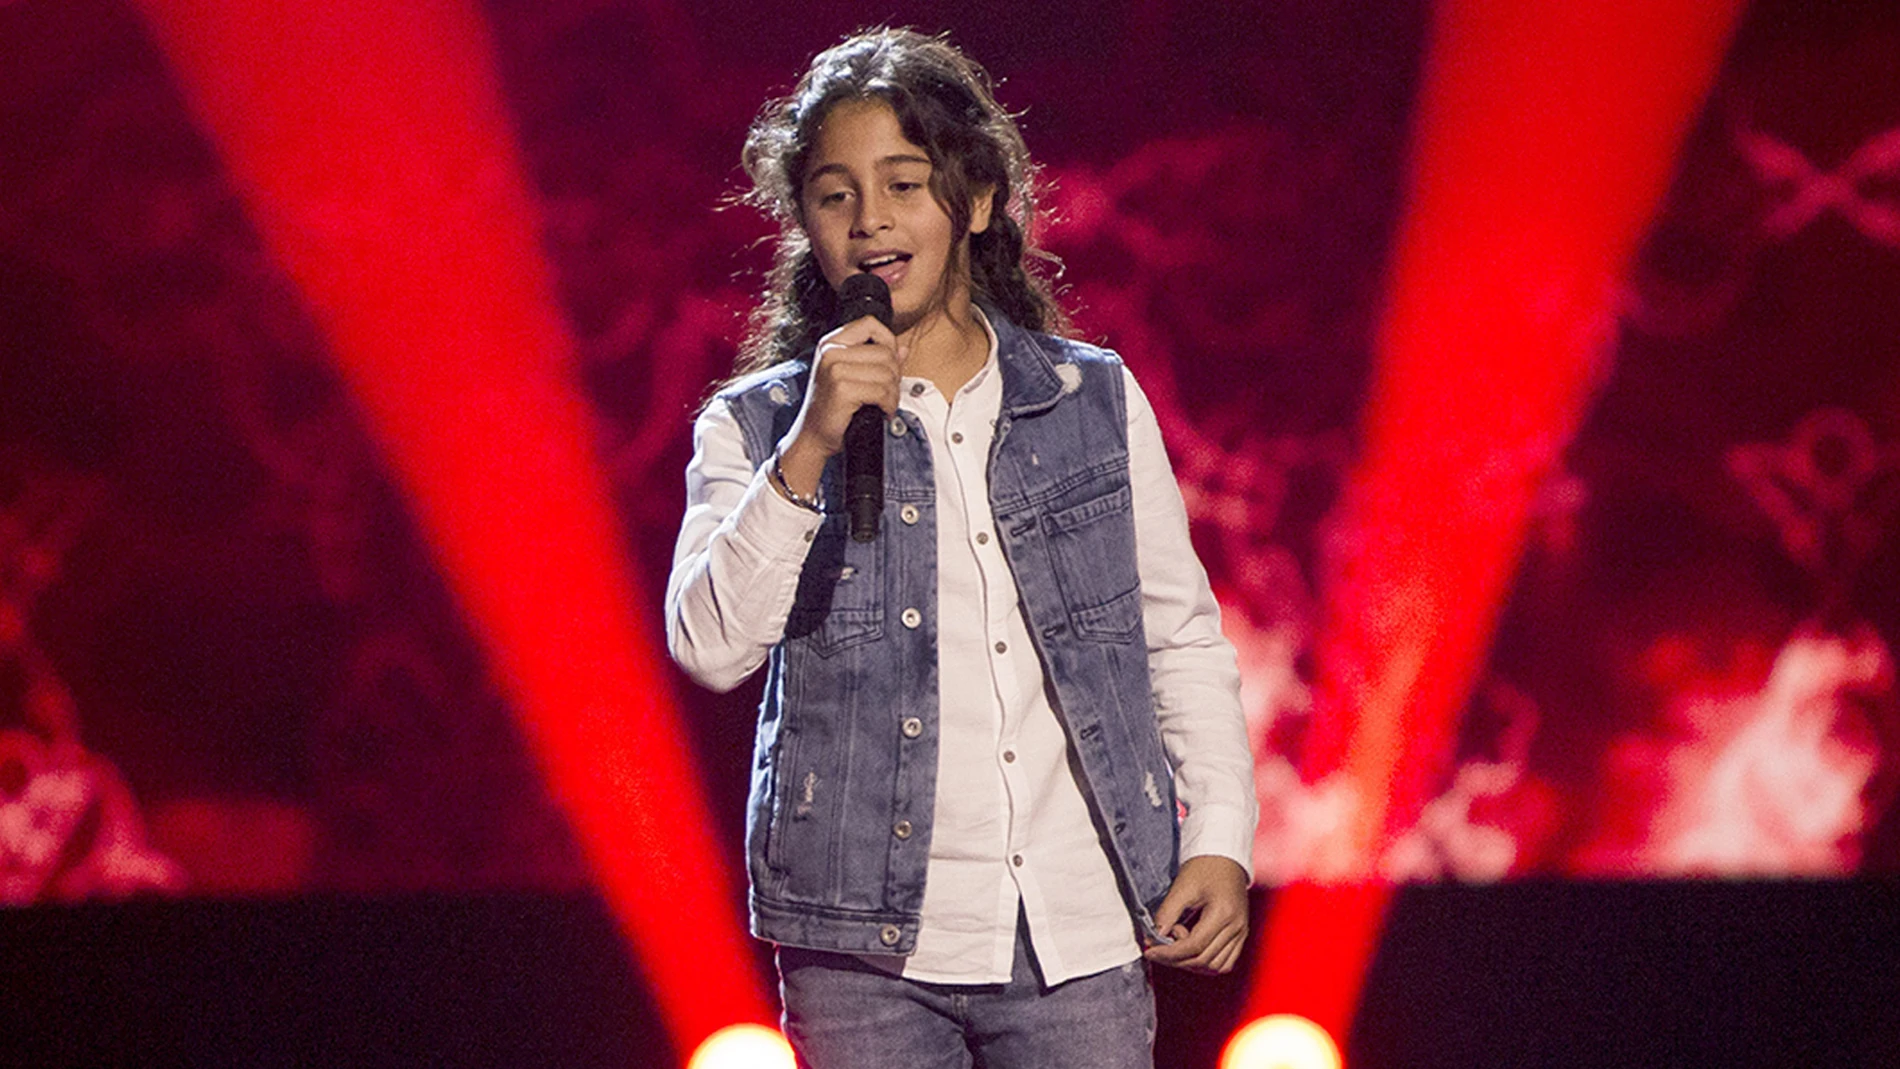 Juan Miguel, talent de 'La Voz Kids'